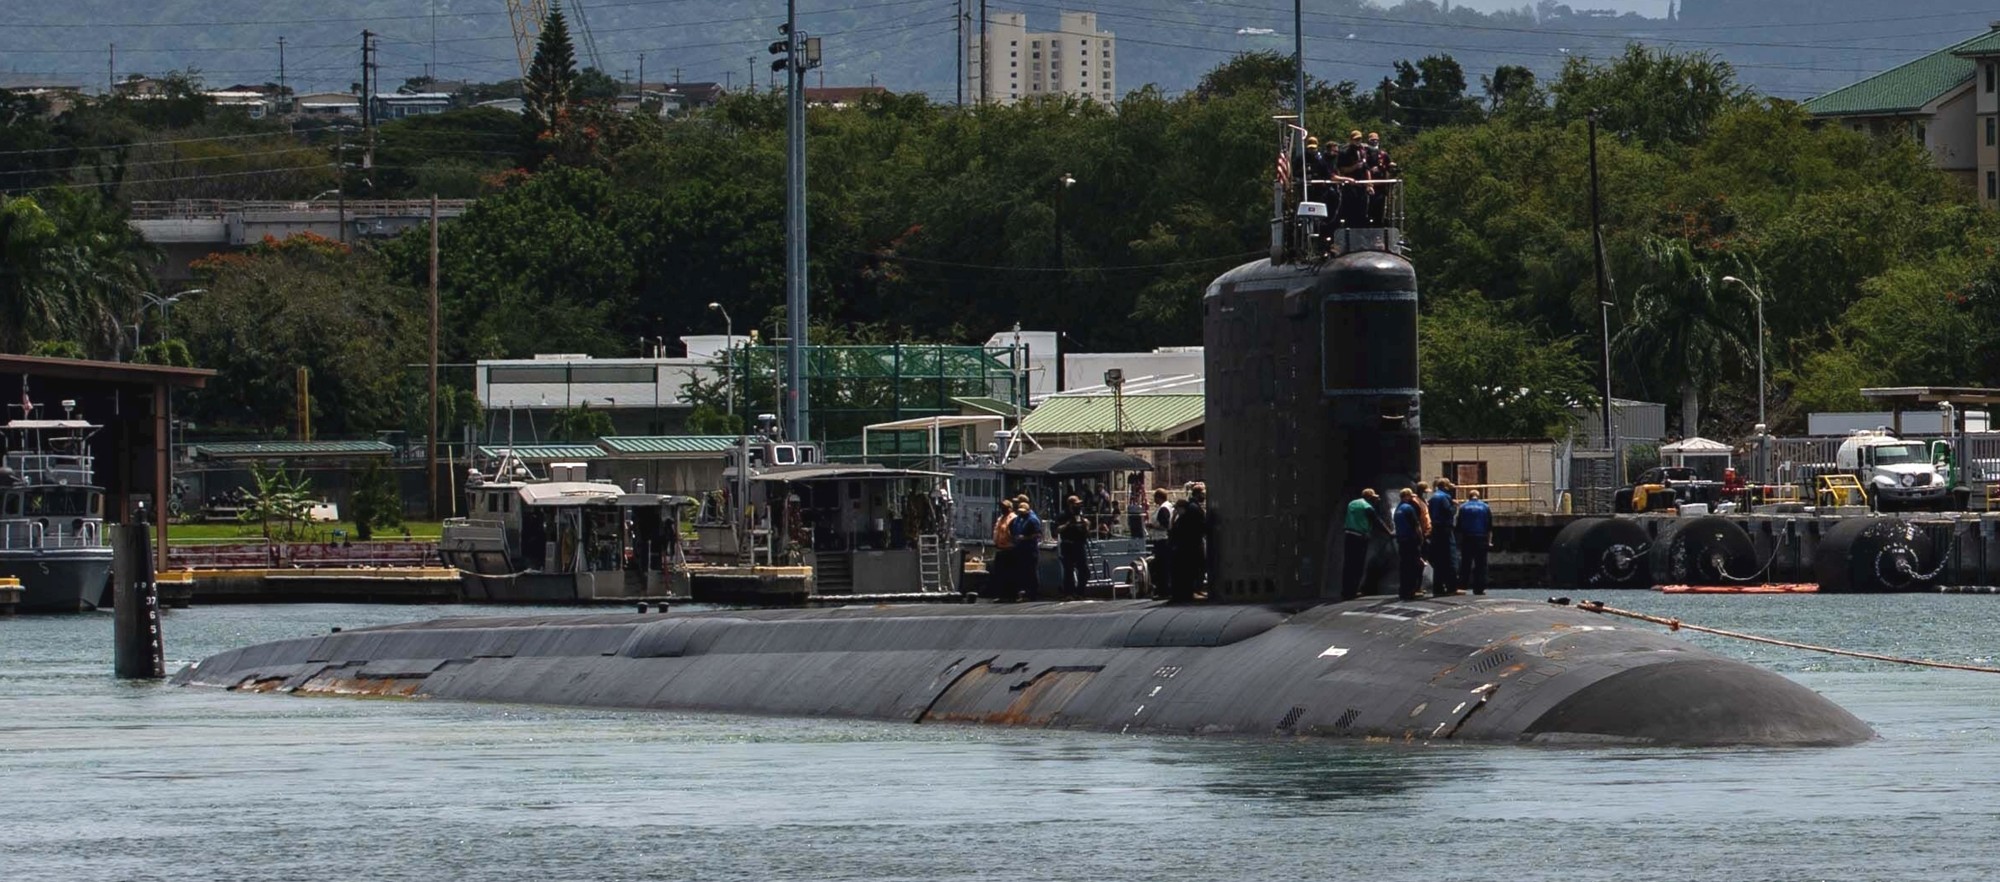 ssn-786 uss illinois virginia class attack submarine us navy 33 joint base pearl harbor hickam hawaii